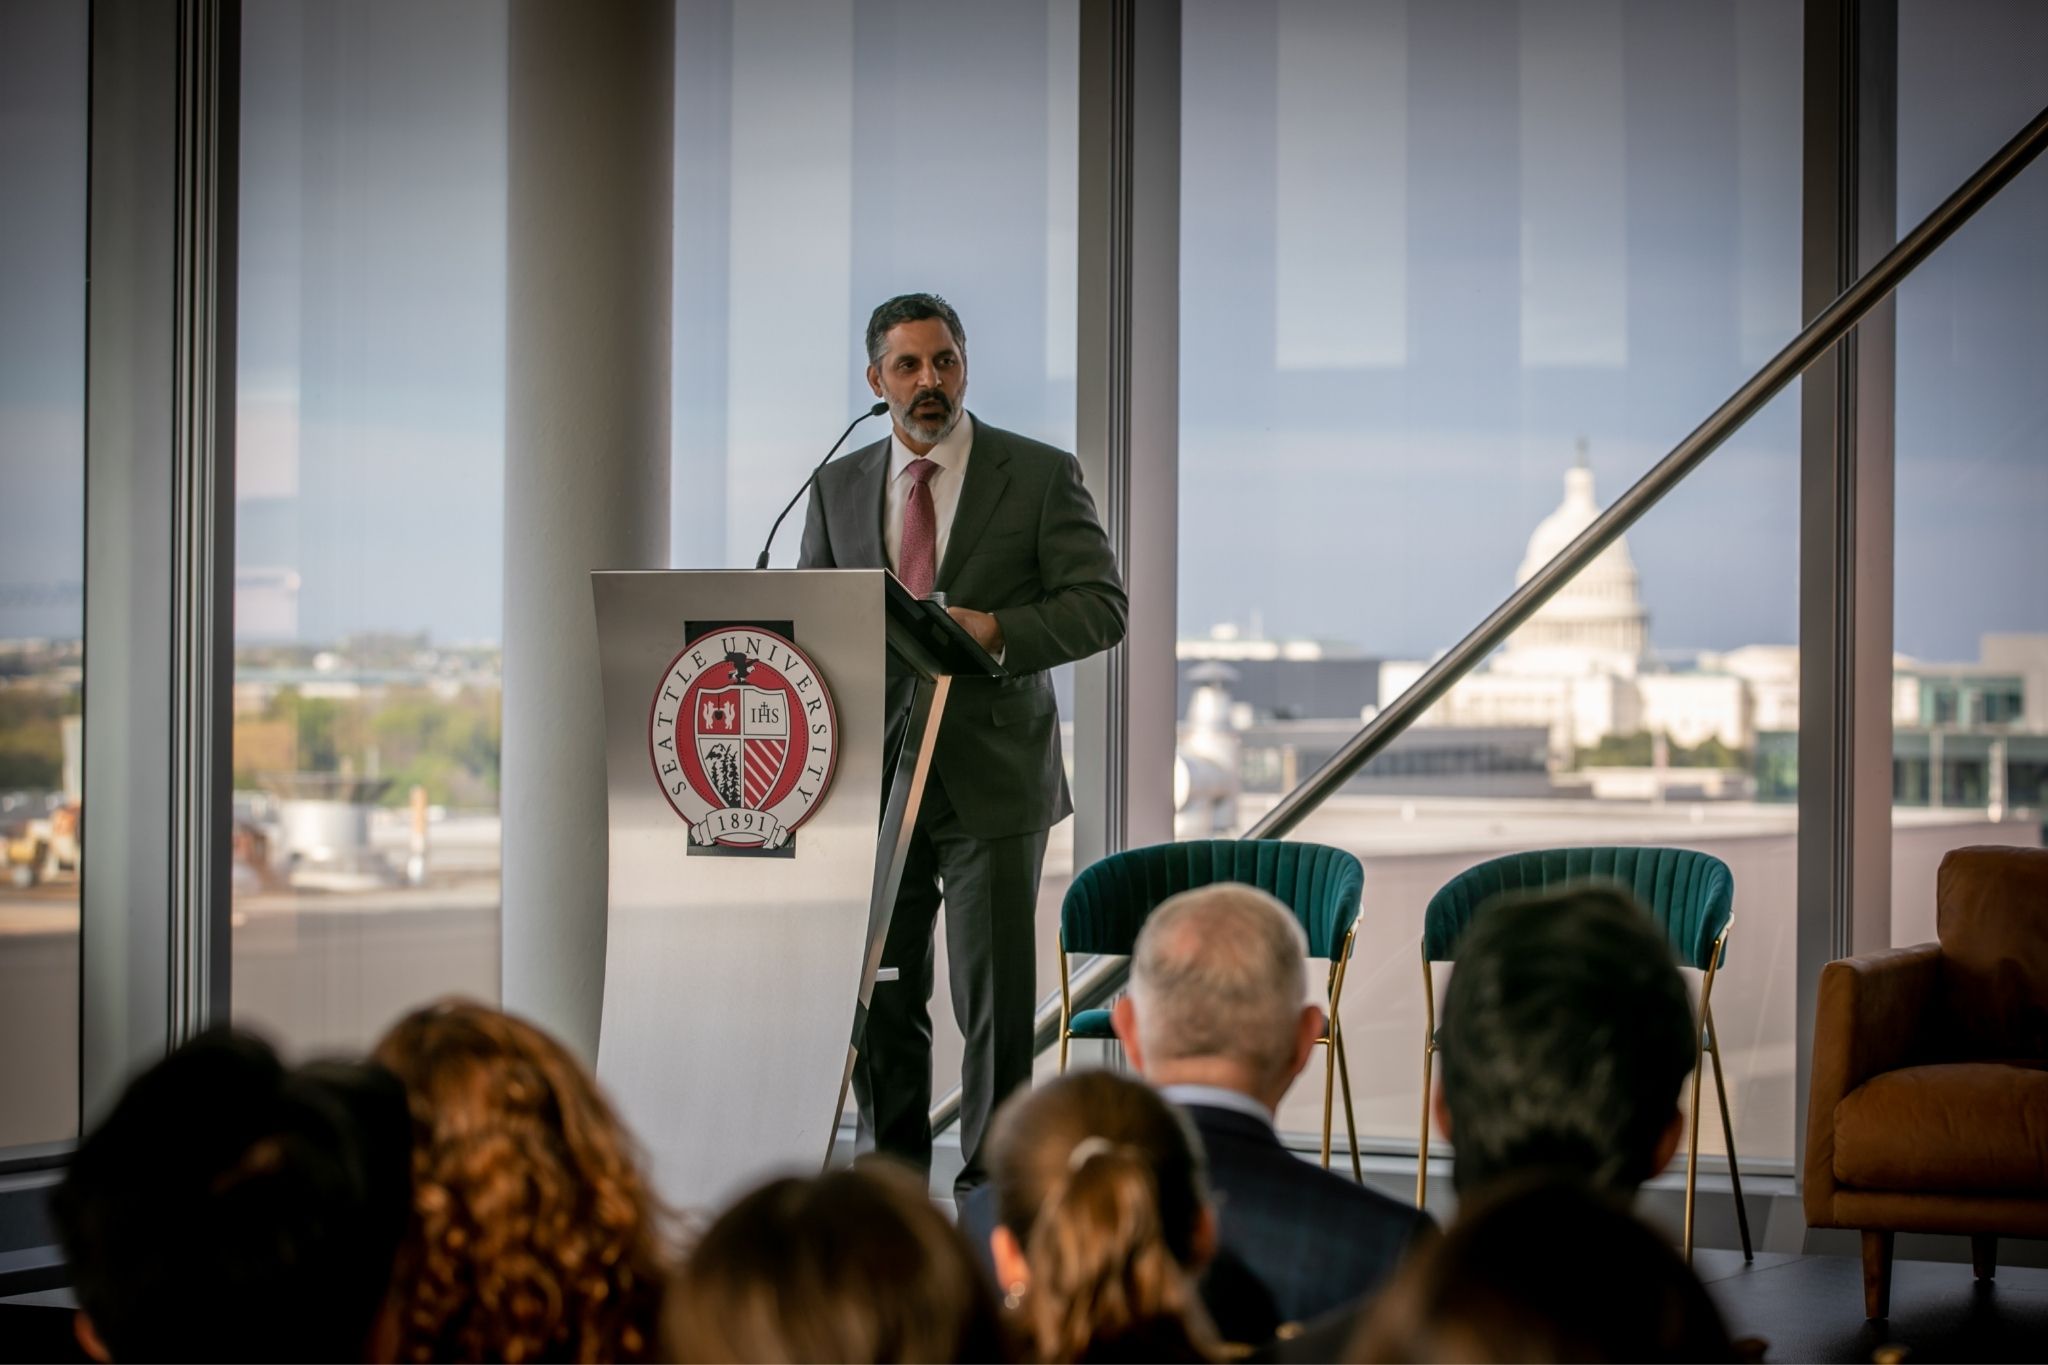 President Peñalver address D.C. guests